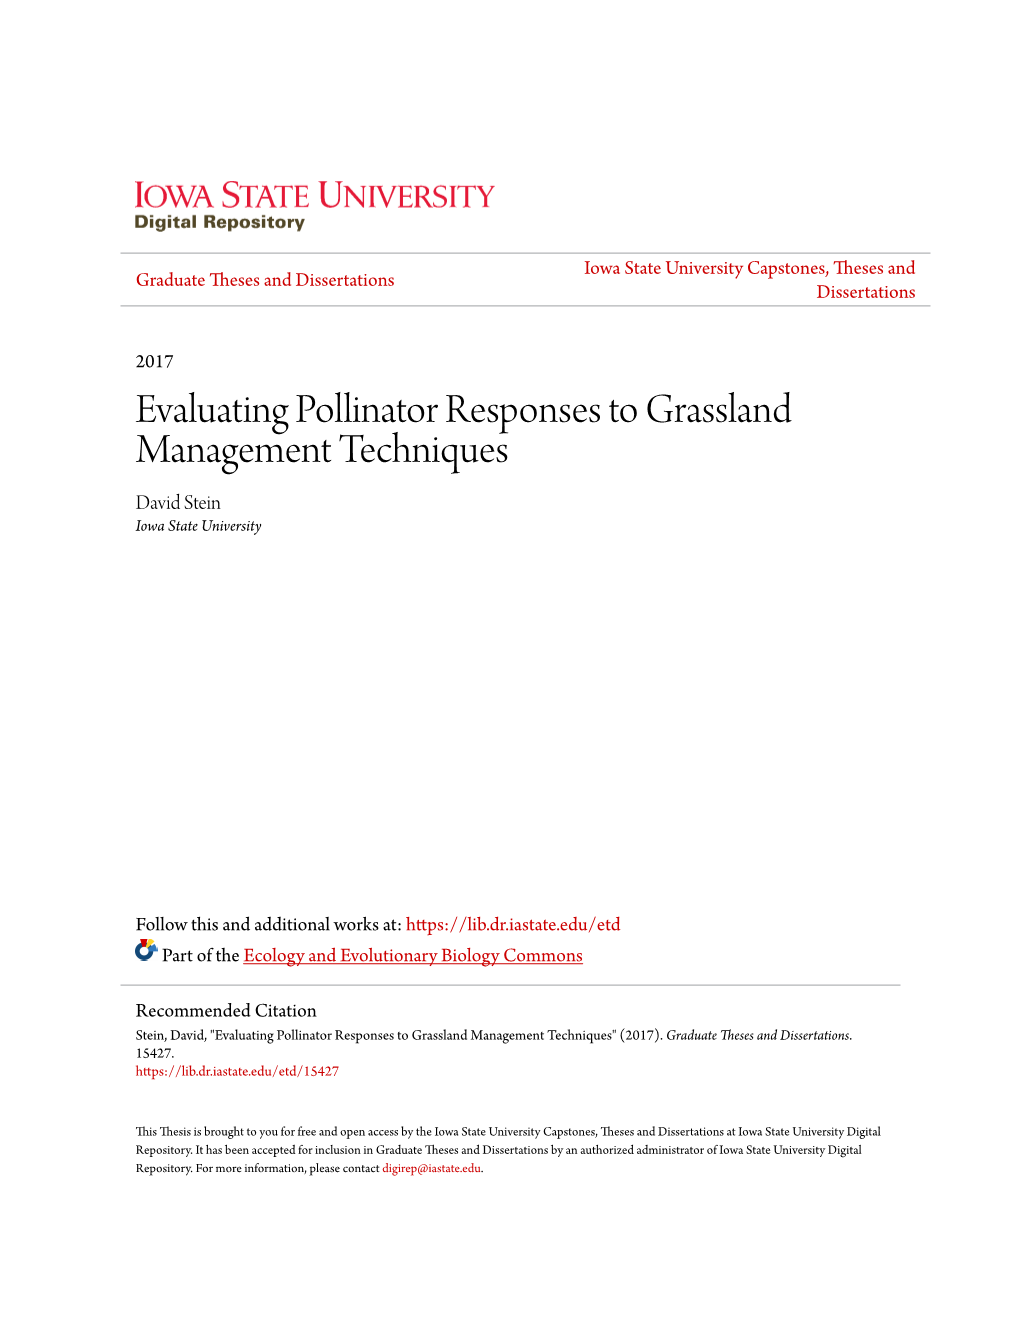 Evaluating Pollinator Responses to Grassland Management Techniques David Stein Iowa State University